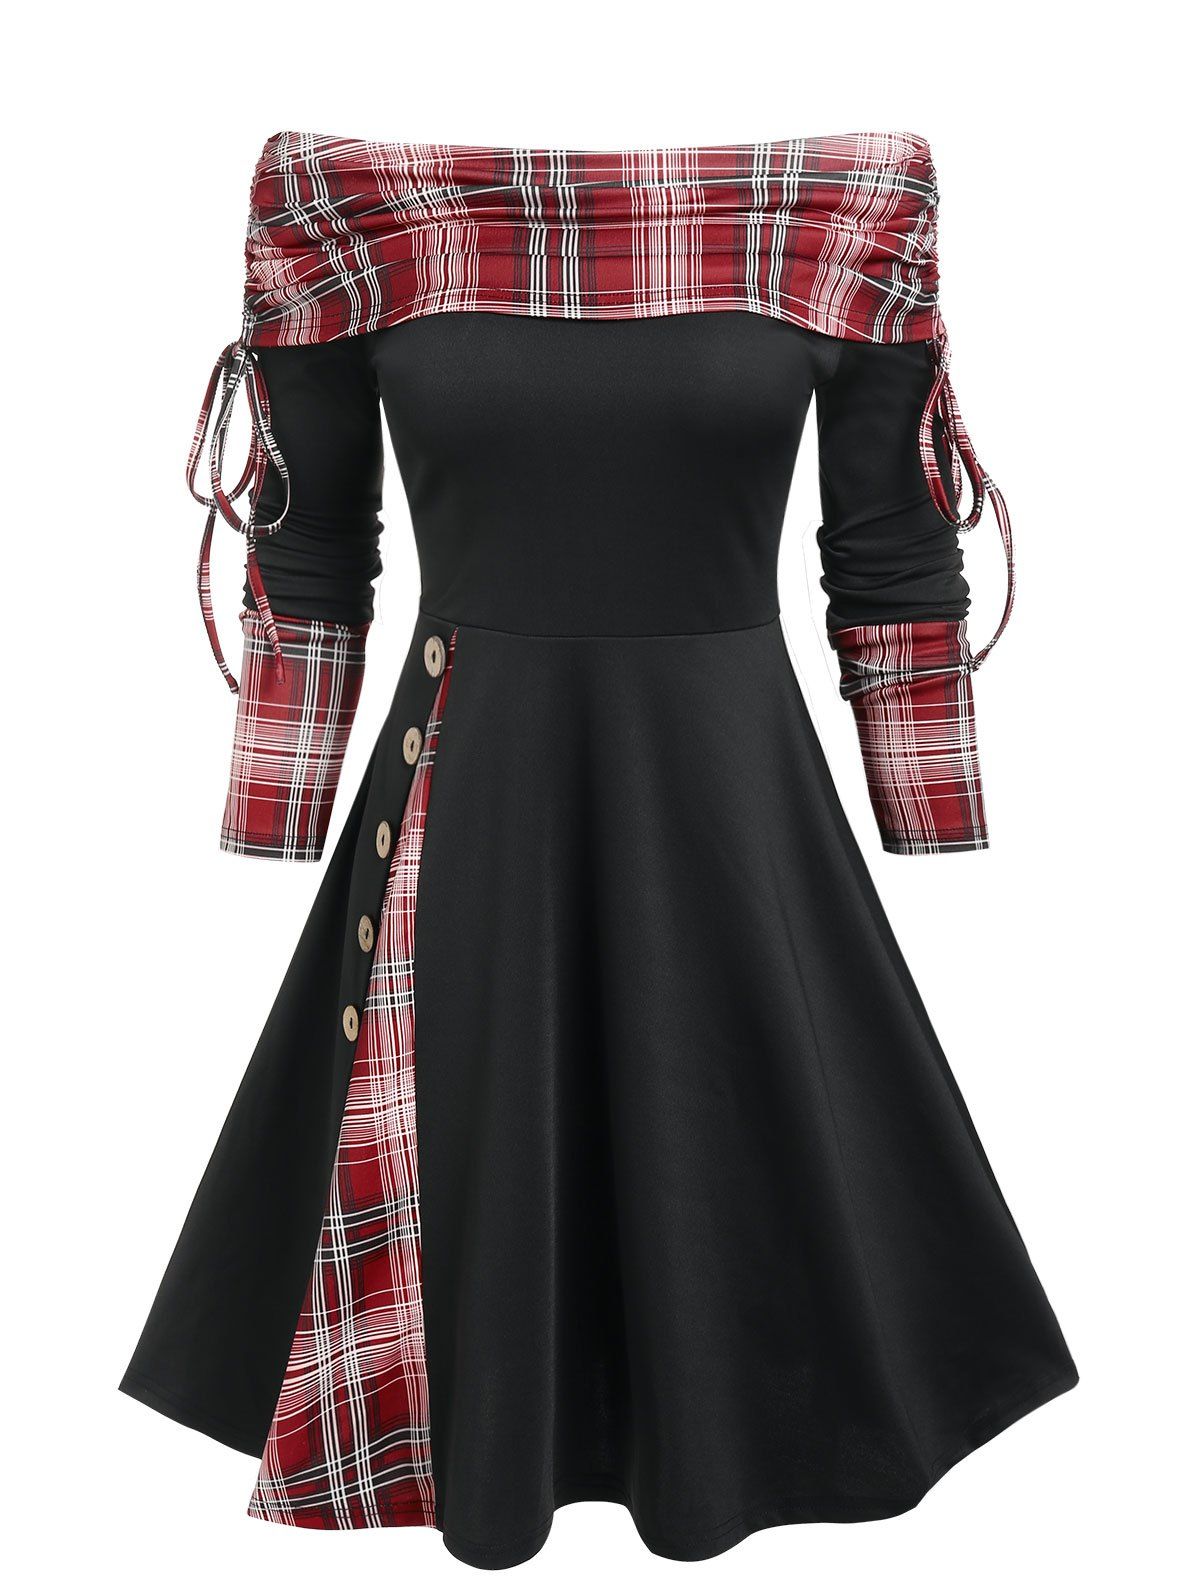 Off The Shoulder Drawstring Plaid Asymmetric Dress - BLACK XL